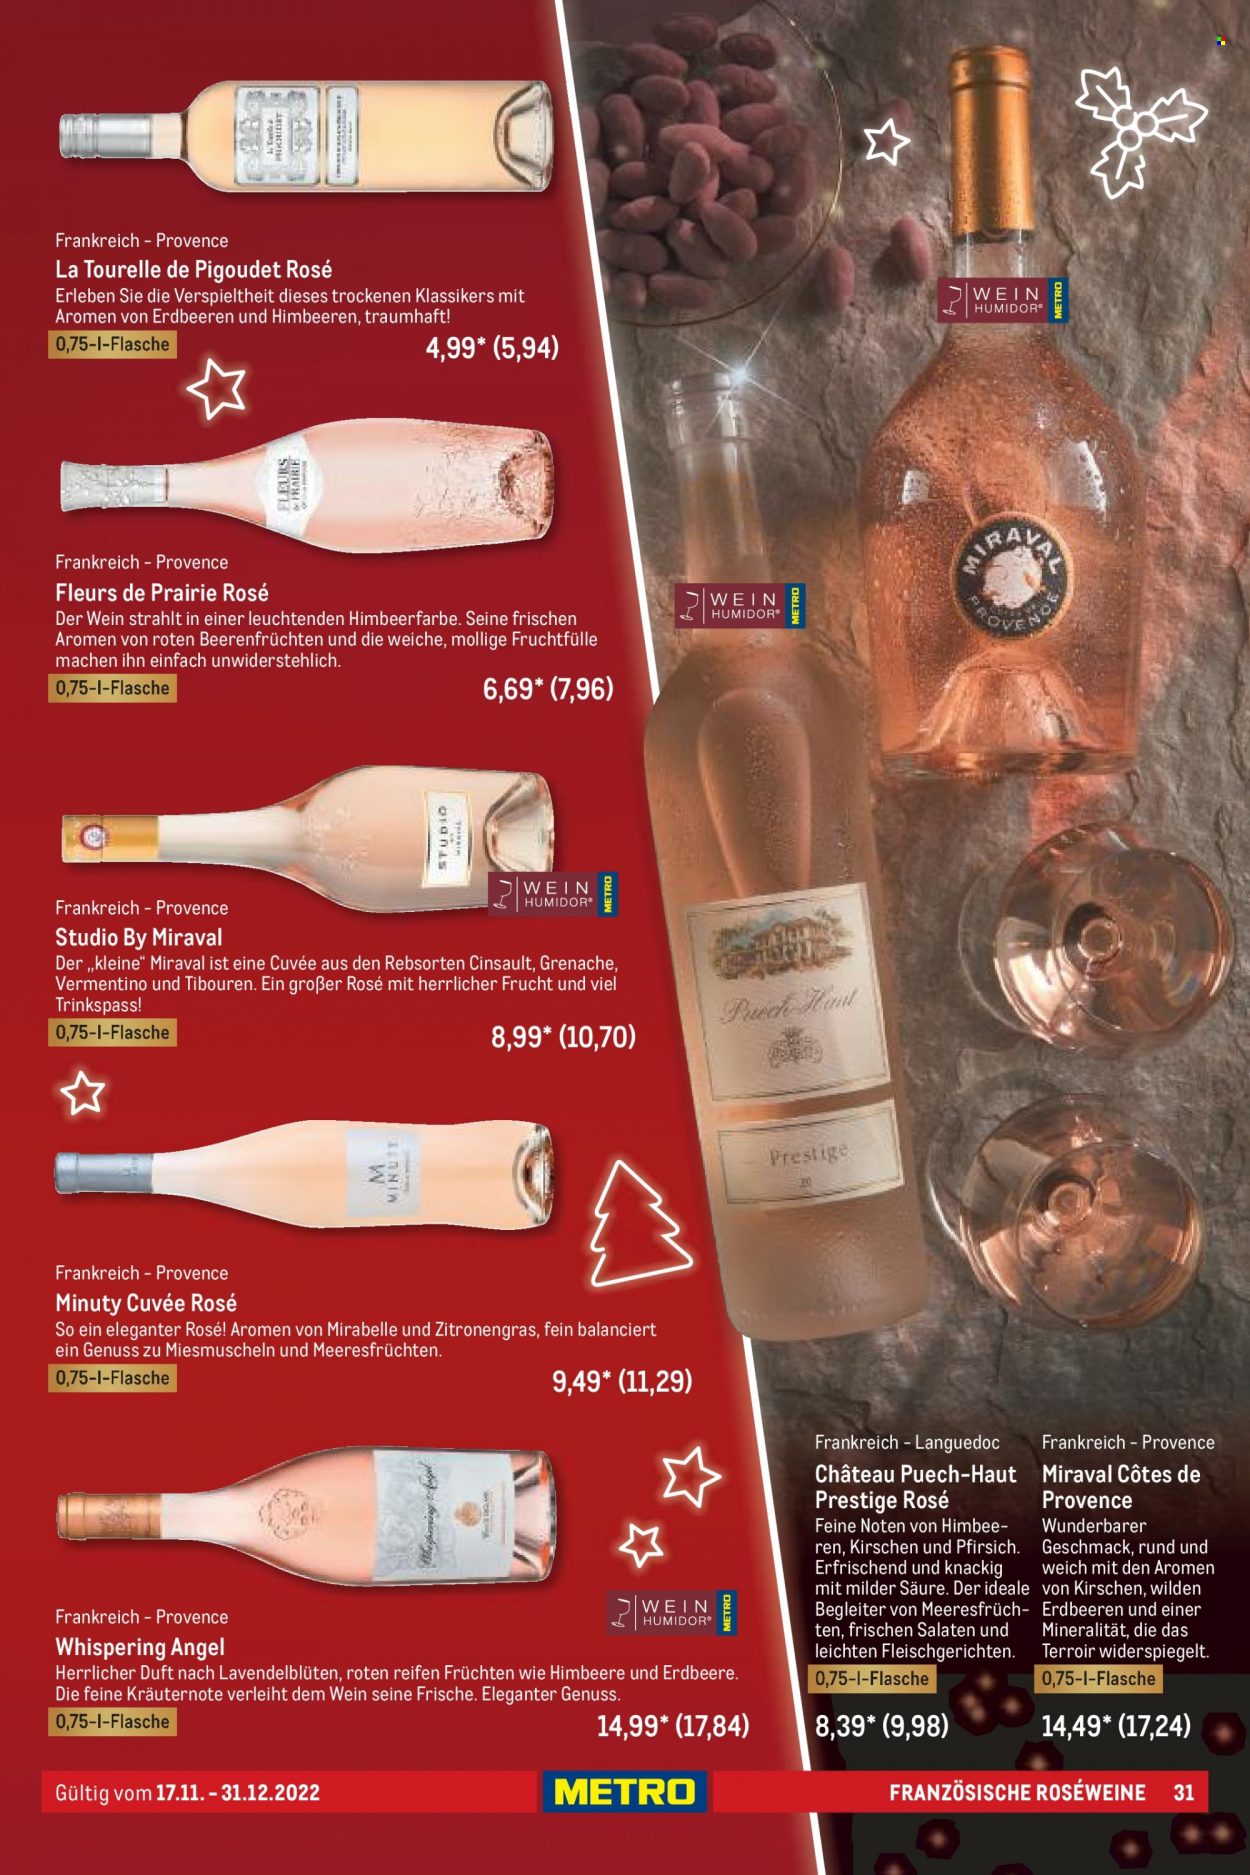 thumbnail - Prospekte Metro - 17.11.2022 - 31.12.2022 - Produkte in Aktion - Alkohol, Muscheln, Wein, Côtes de Provence. Seite 31.